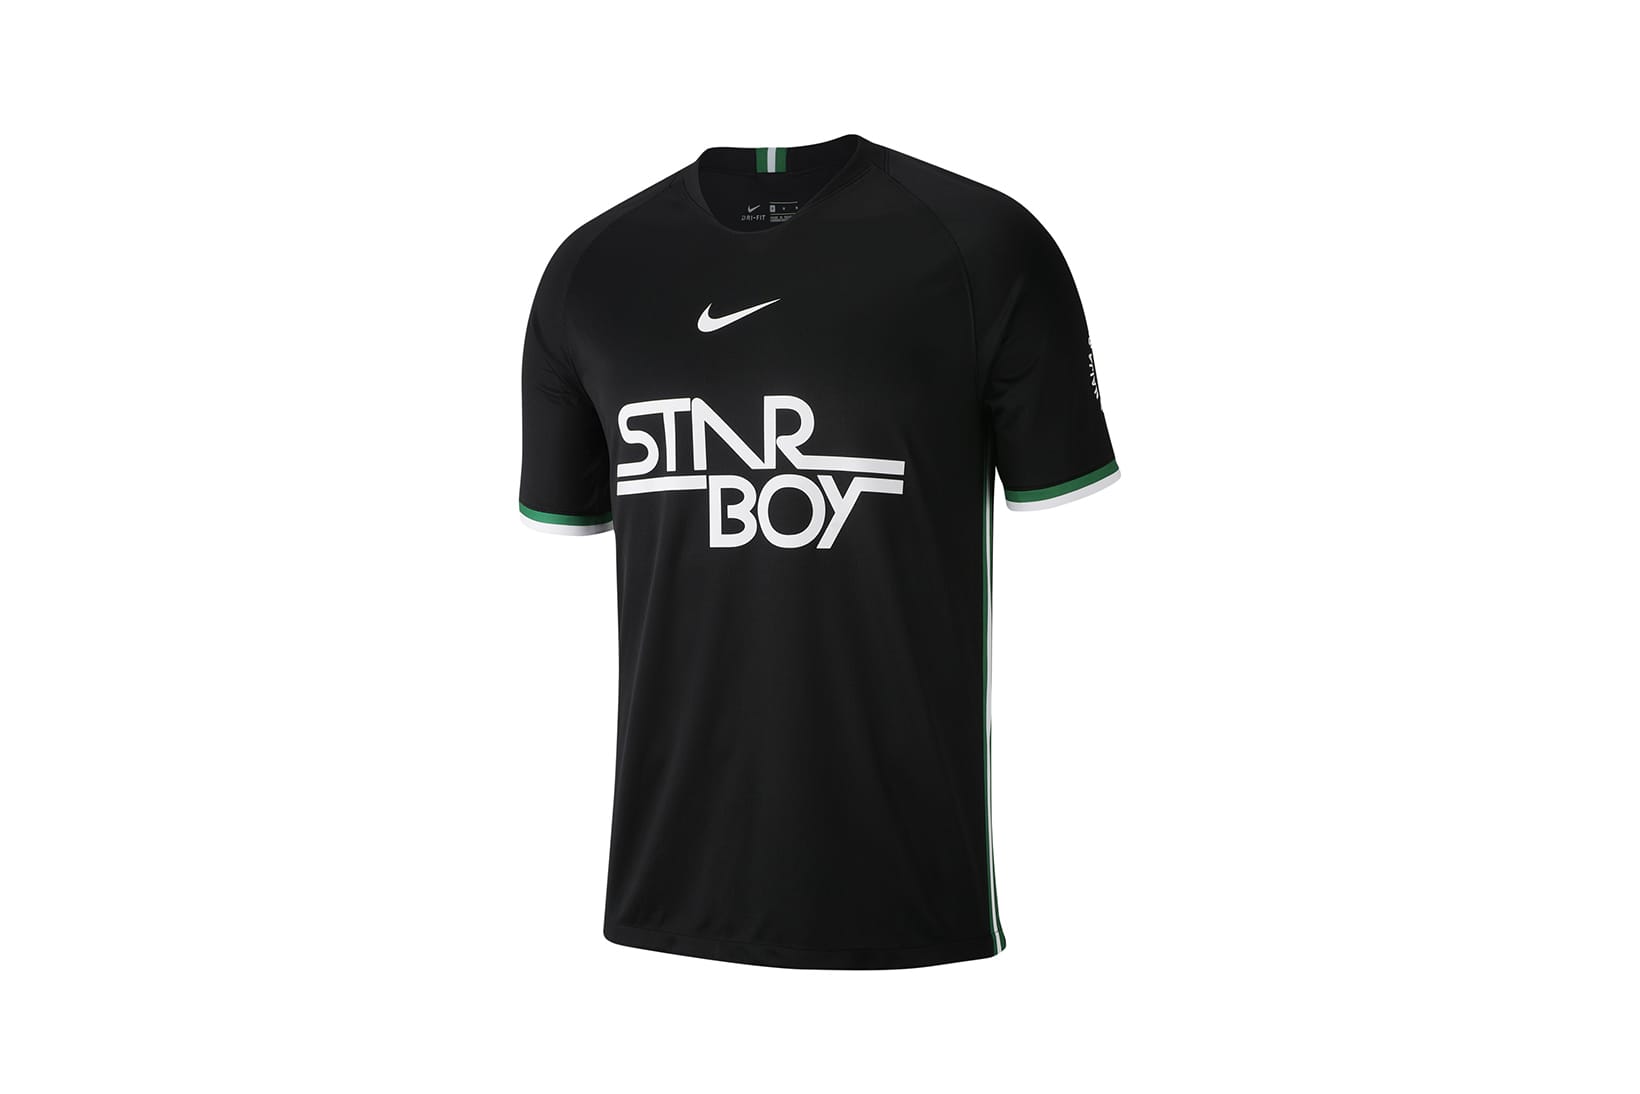 Wizkid x Nike Starboy Jersey Release 